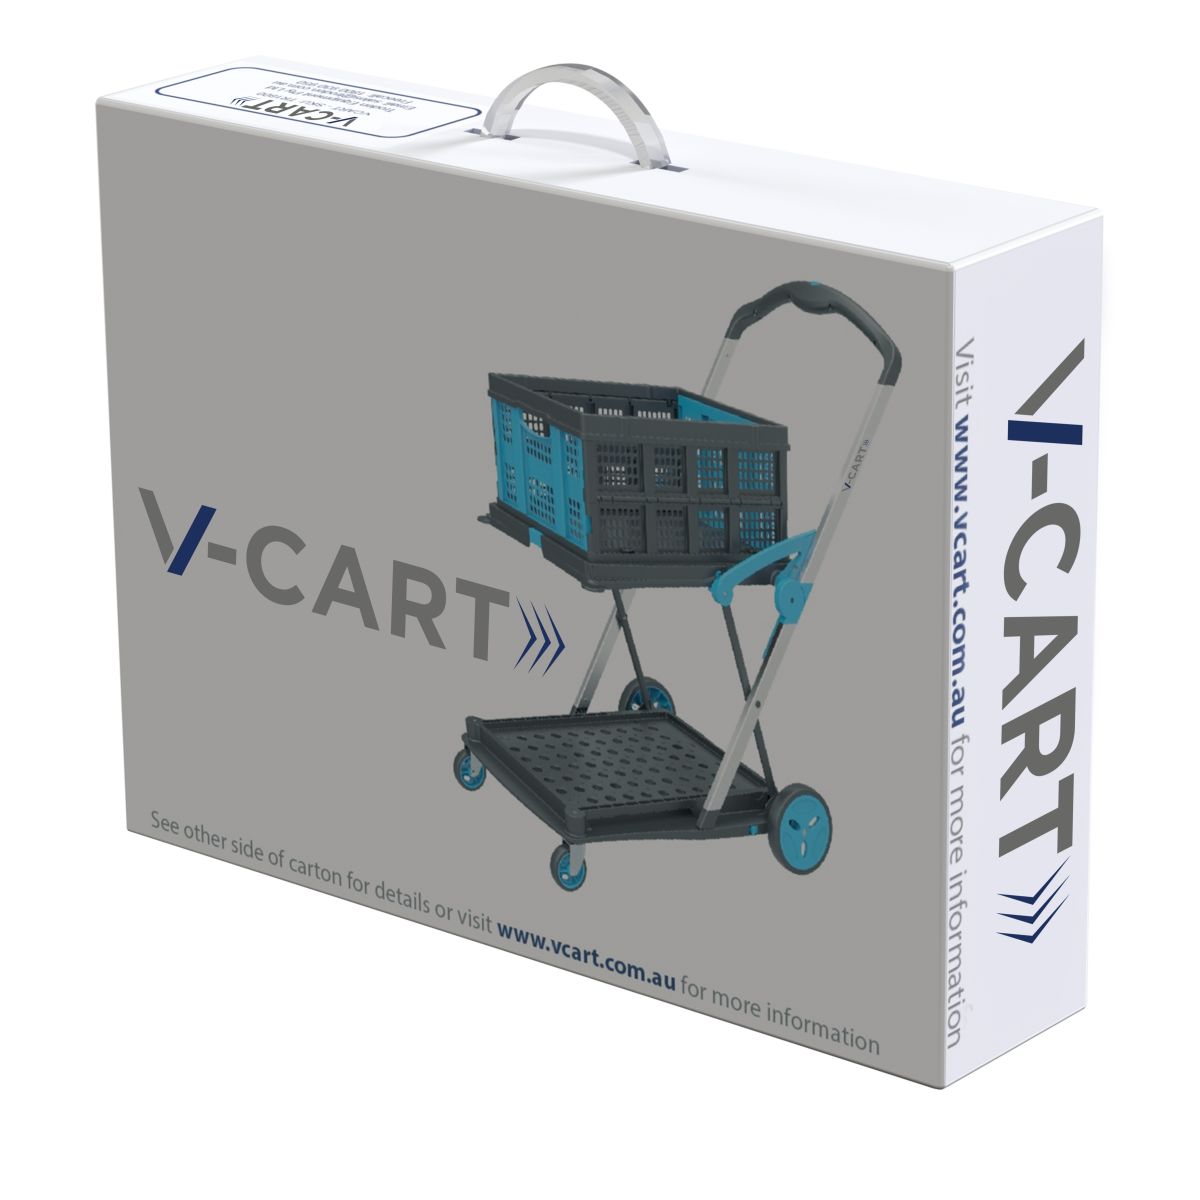 V-Cart Carton